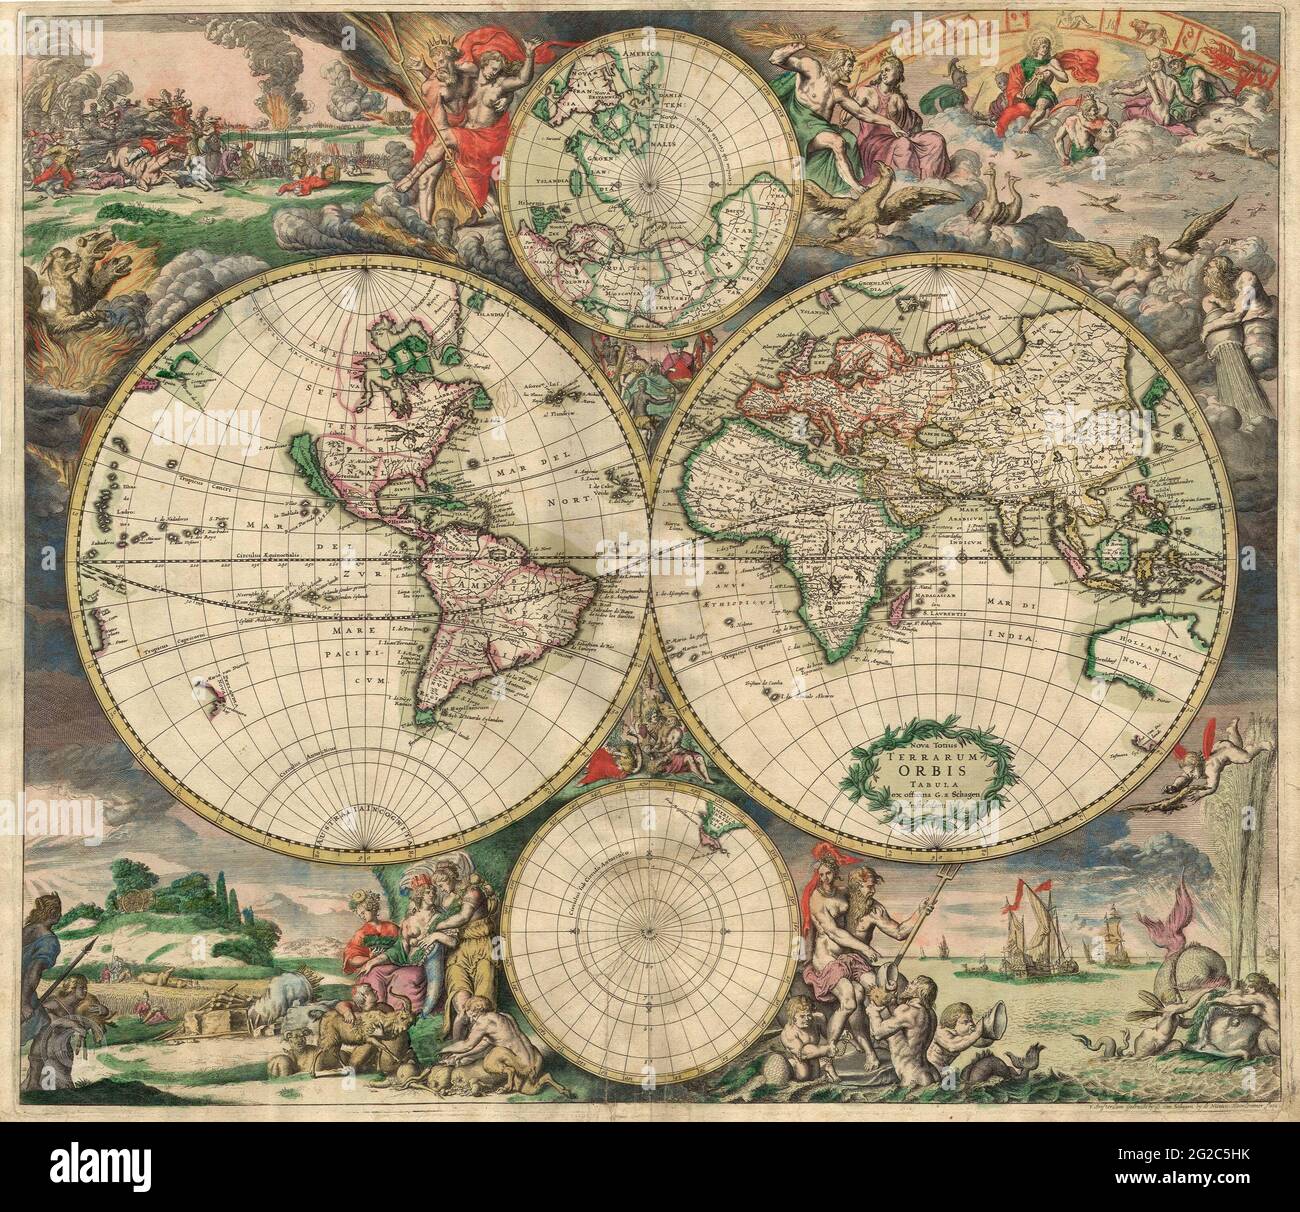 Old World Map, Antique World Map, Vintage World Map, Retro World Map, Old Map of World, Vintage Map of World, Retro Map of World, World Map, Old World Stock Photo